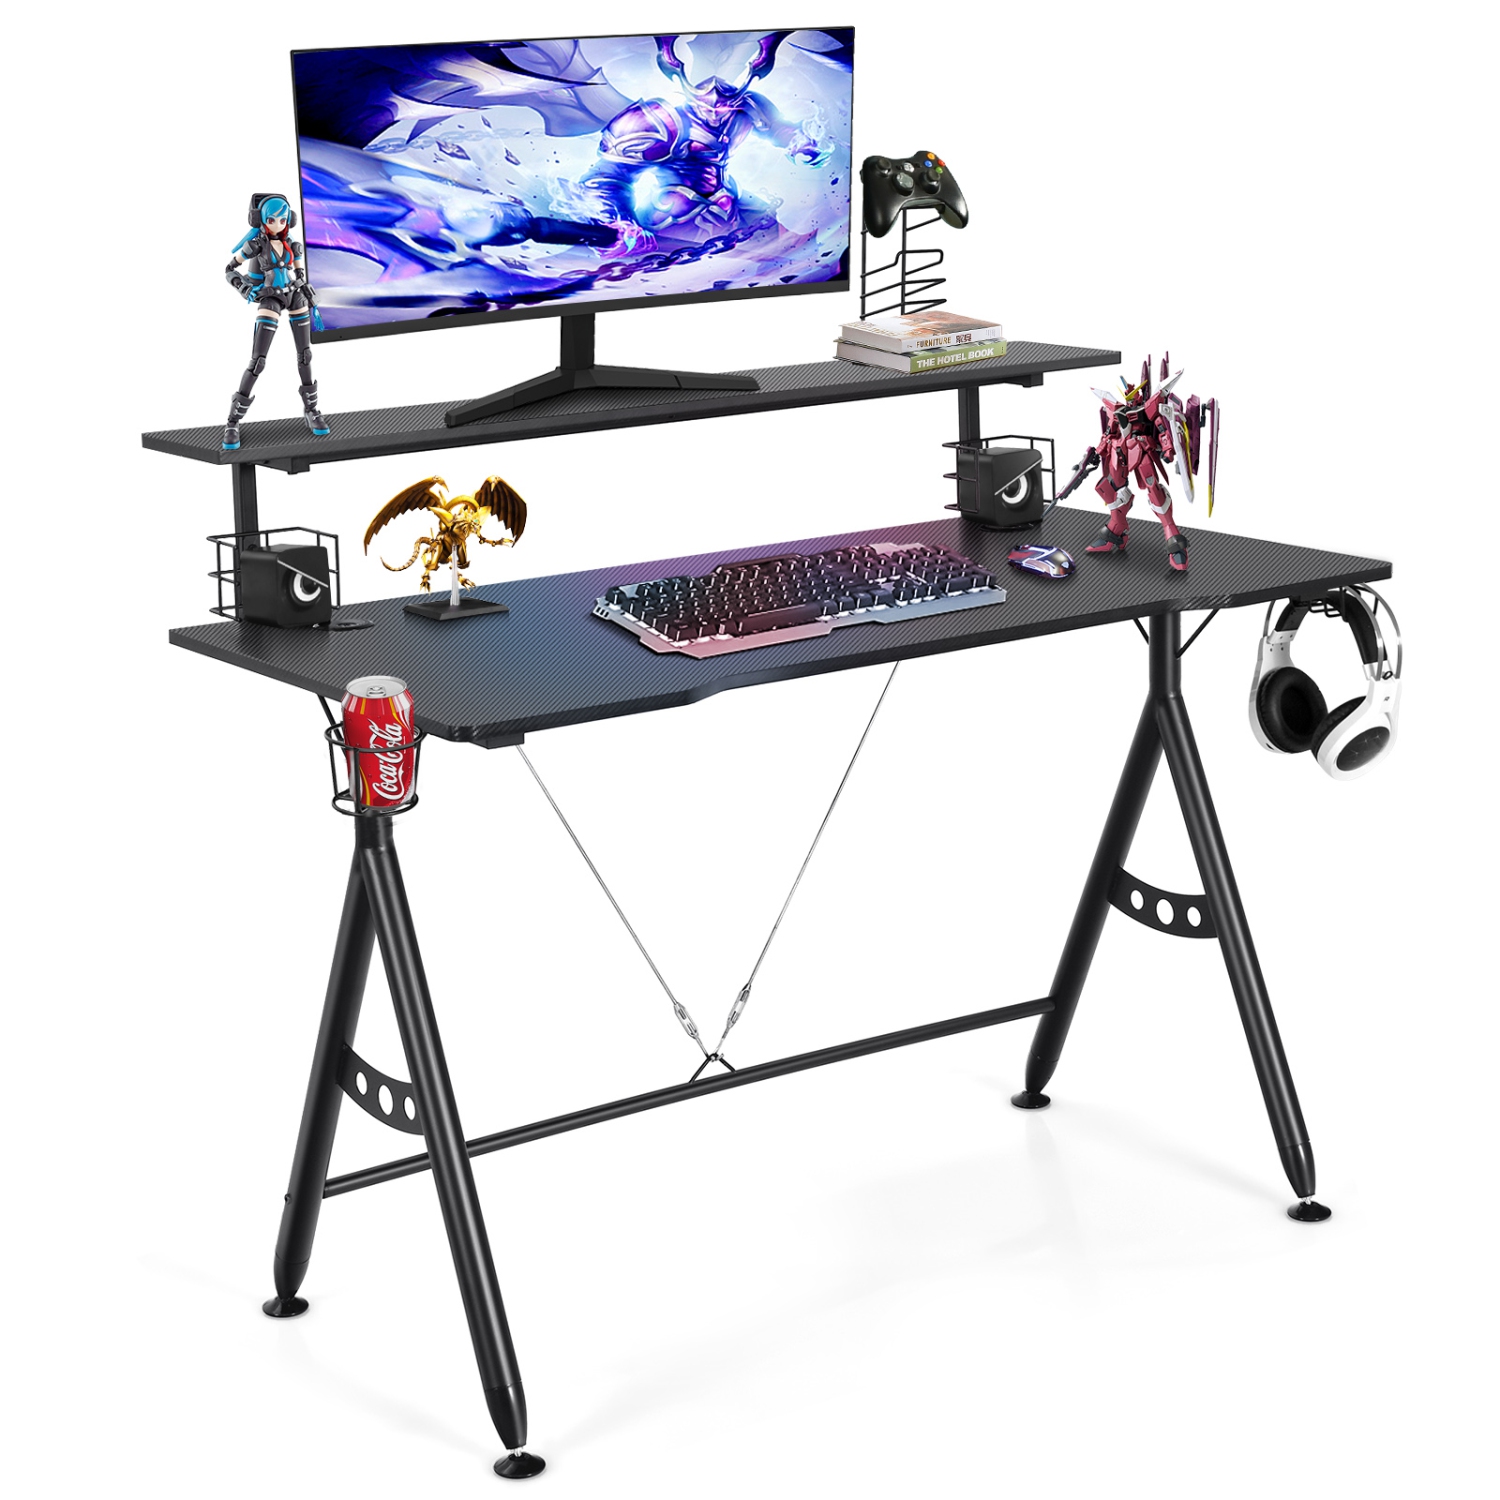 Topbuy Gaming Desk Dual Monitor Mount Ergonomic Y Shaped Computer Desk w/Cup Holder Headphone Hook